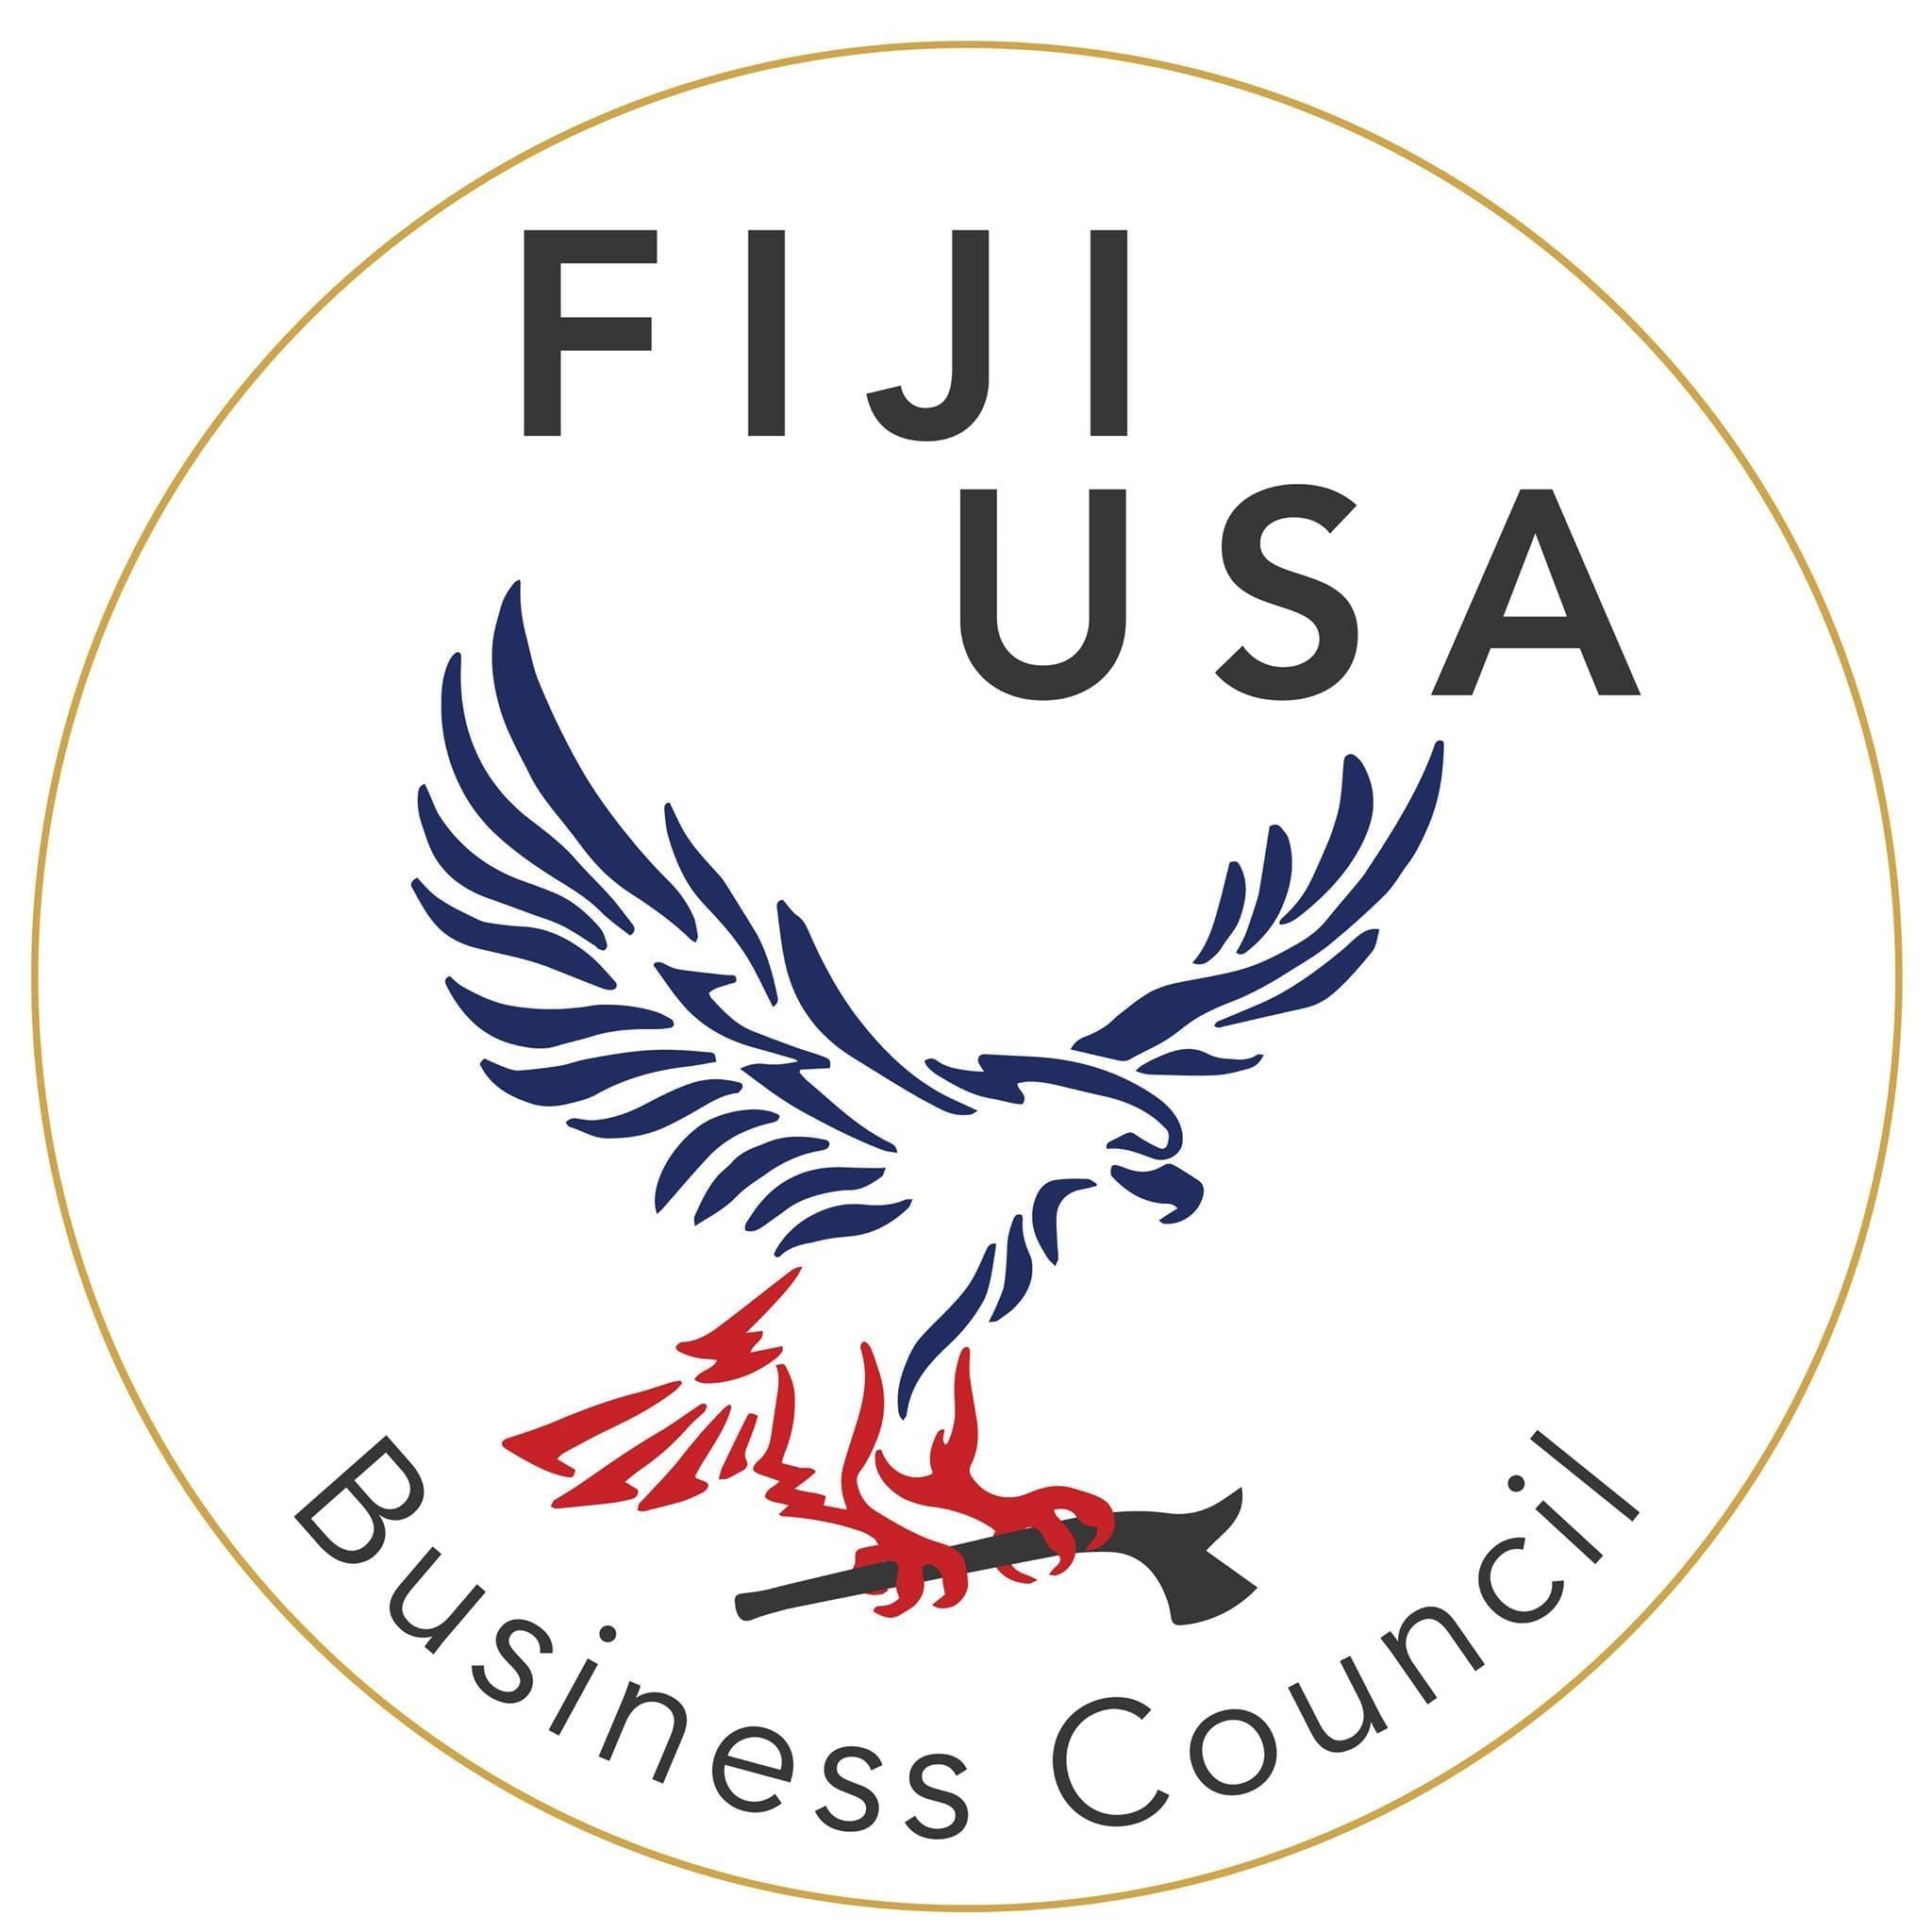 FIJI USA Business Council Logo